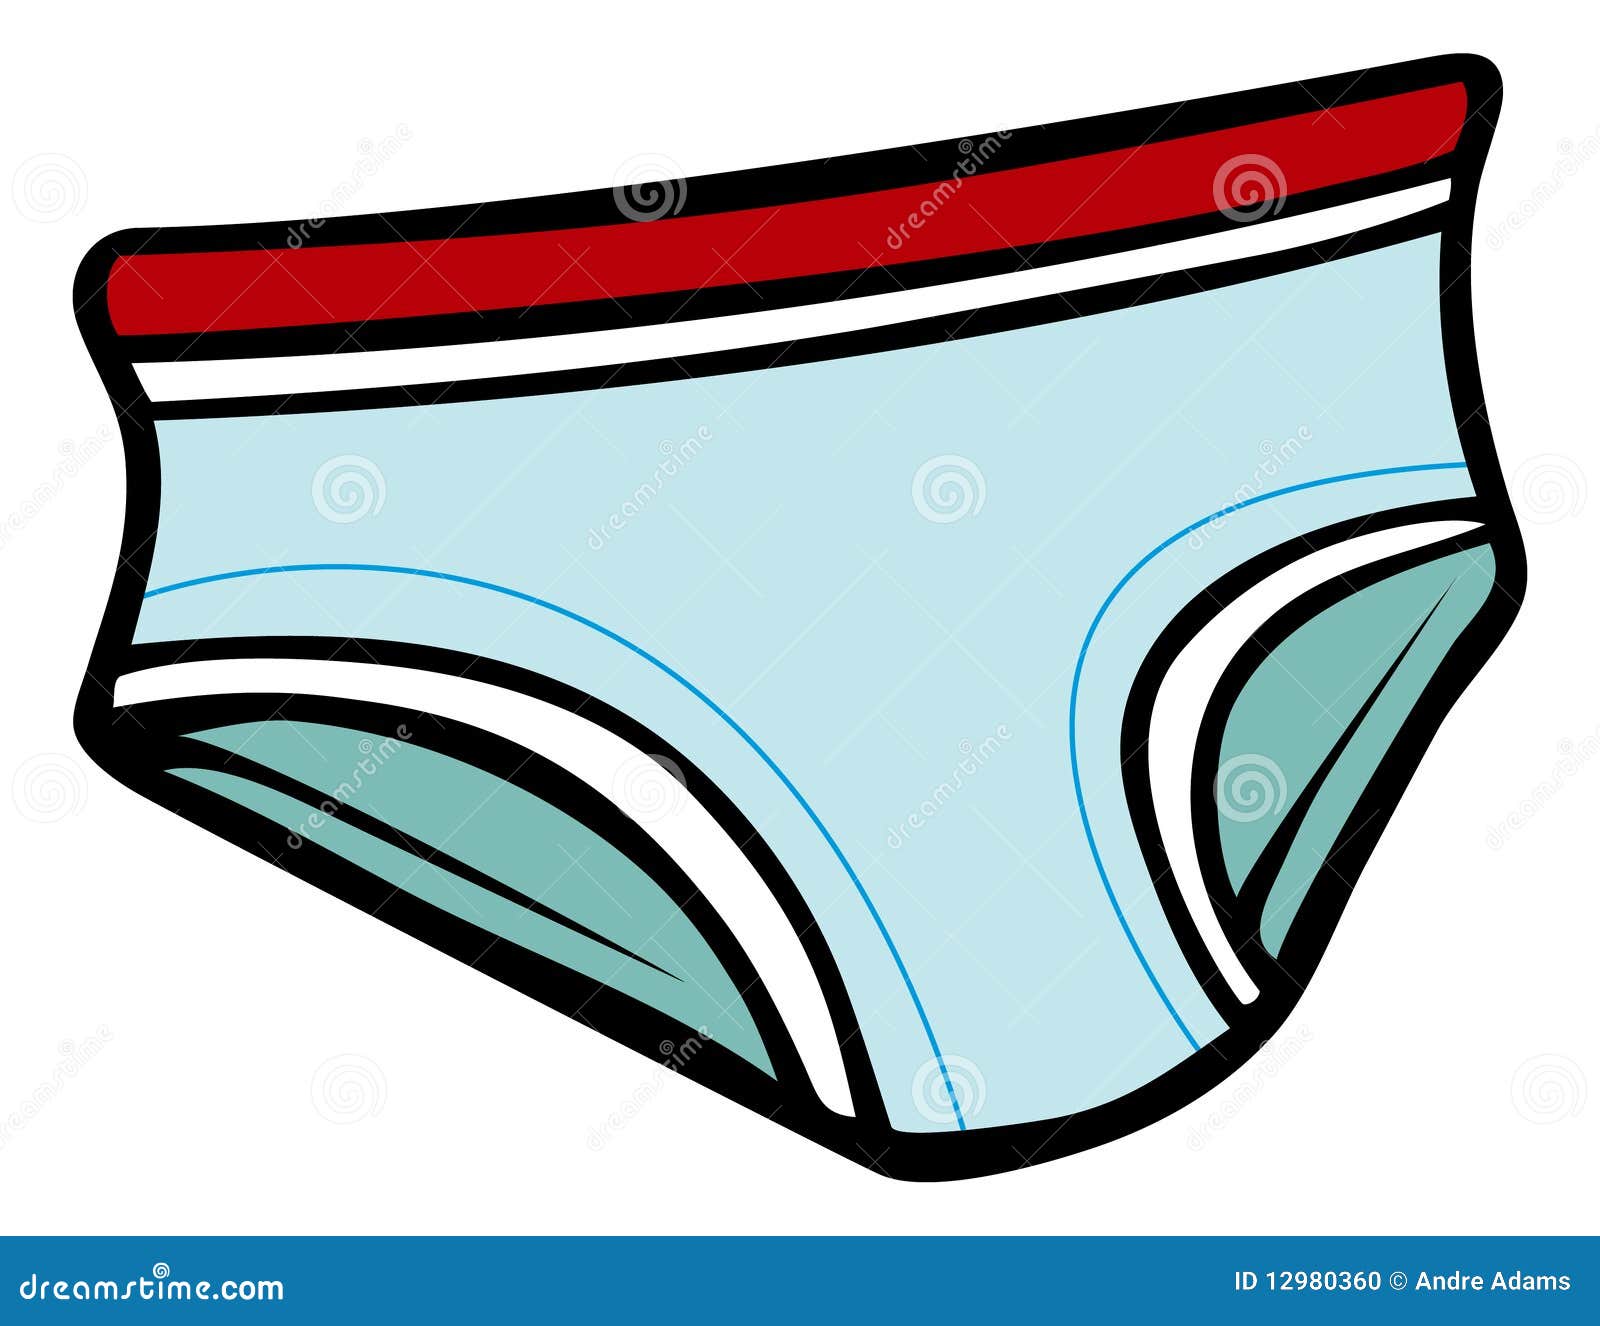 funny underwear clipart - photo #10